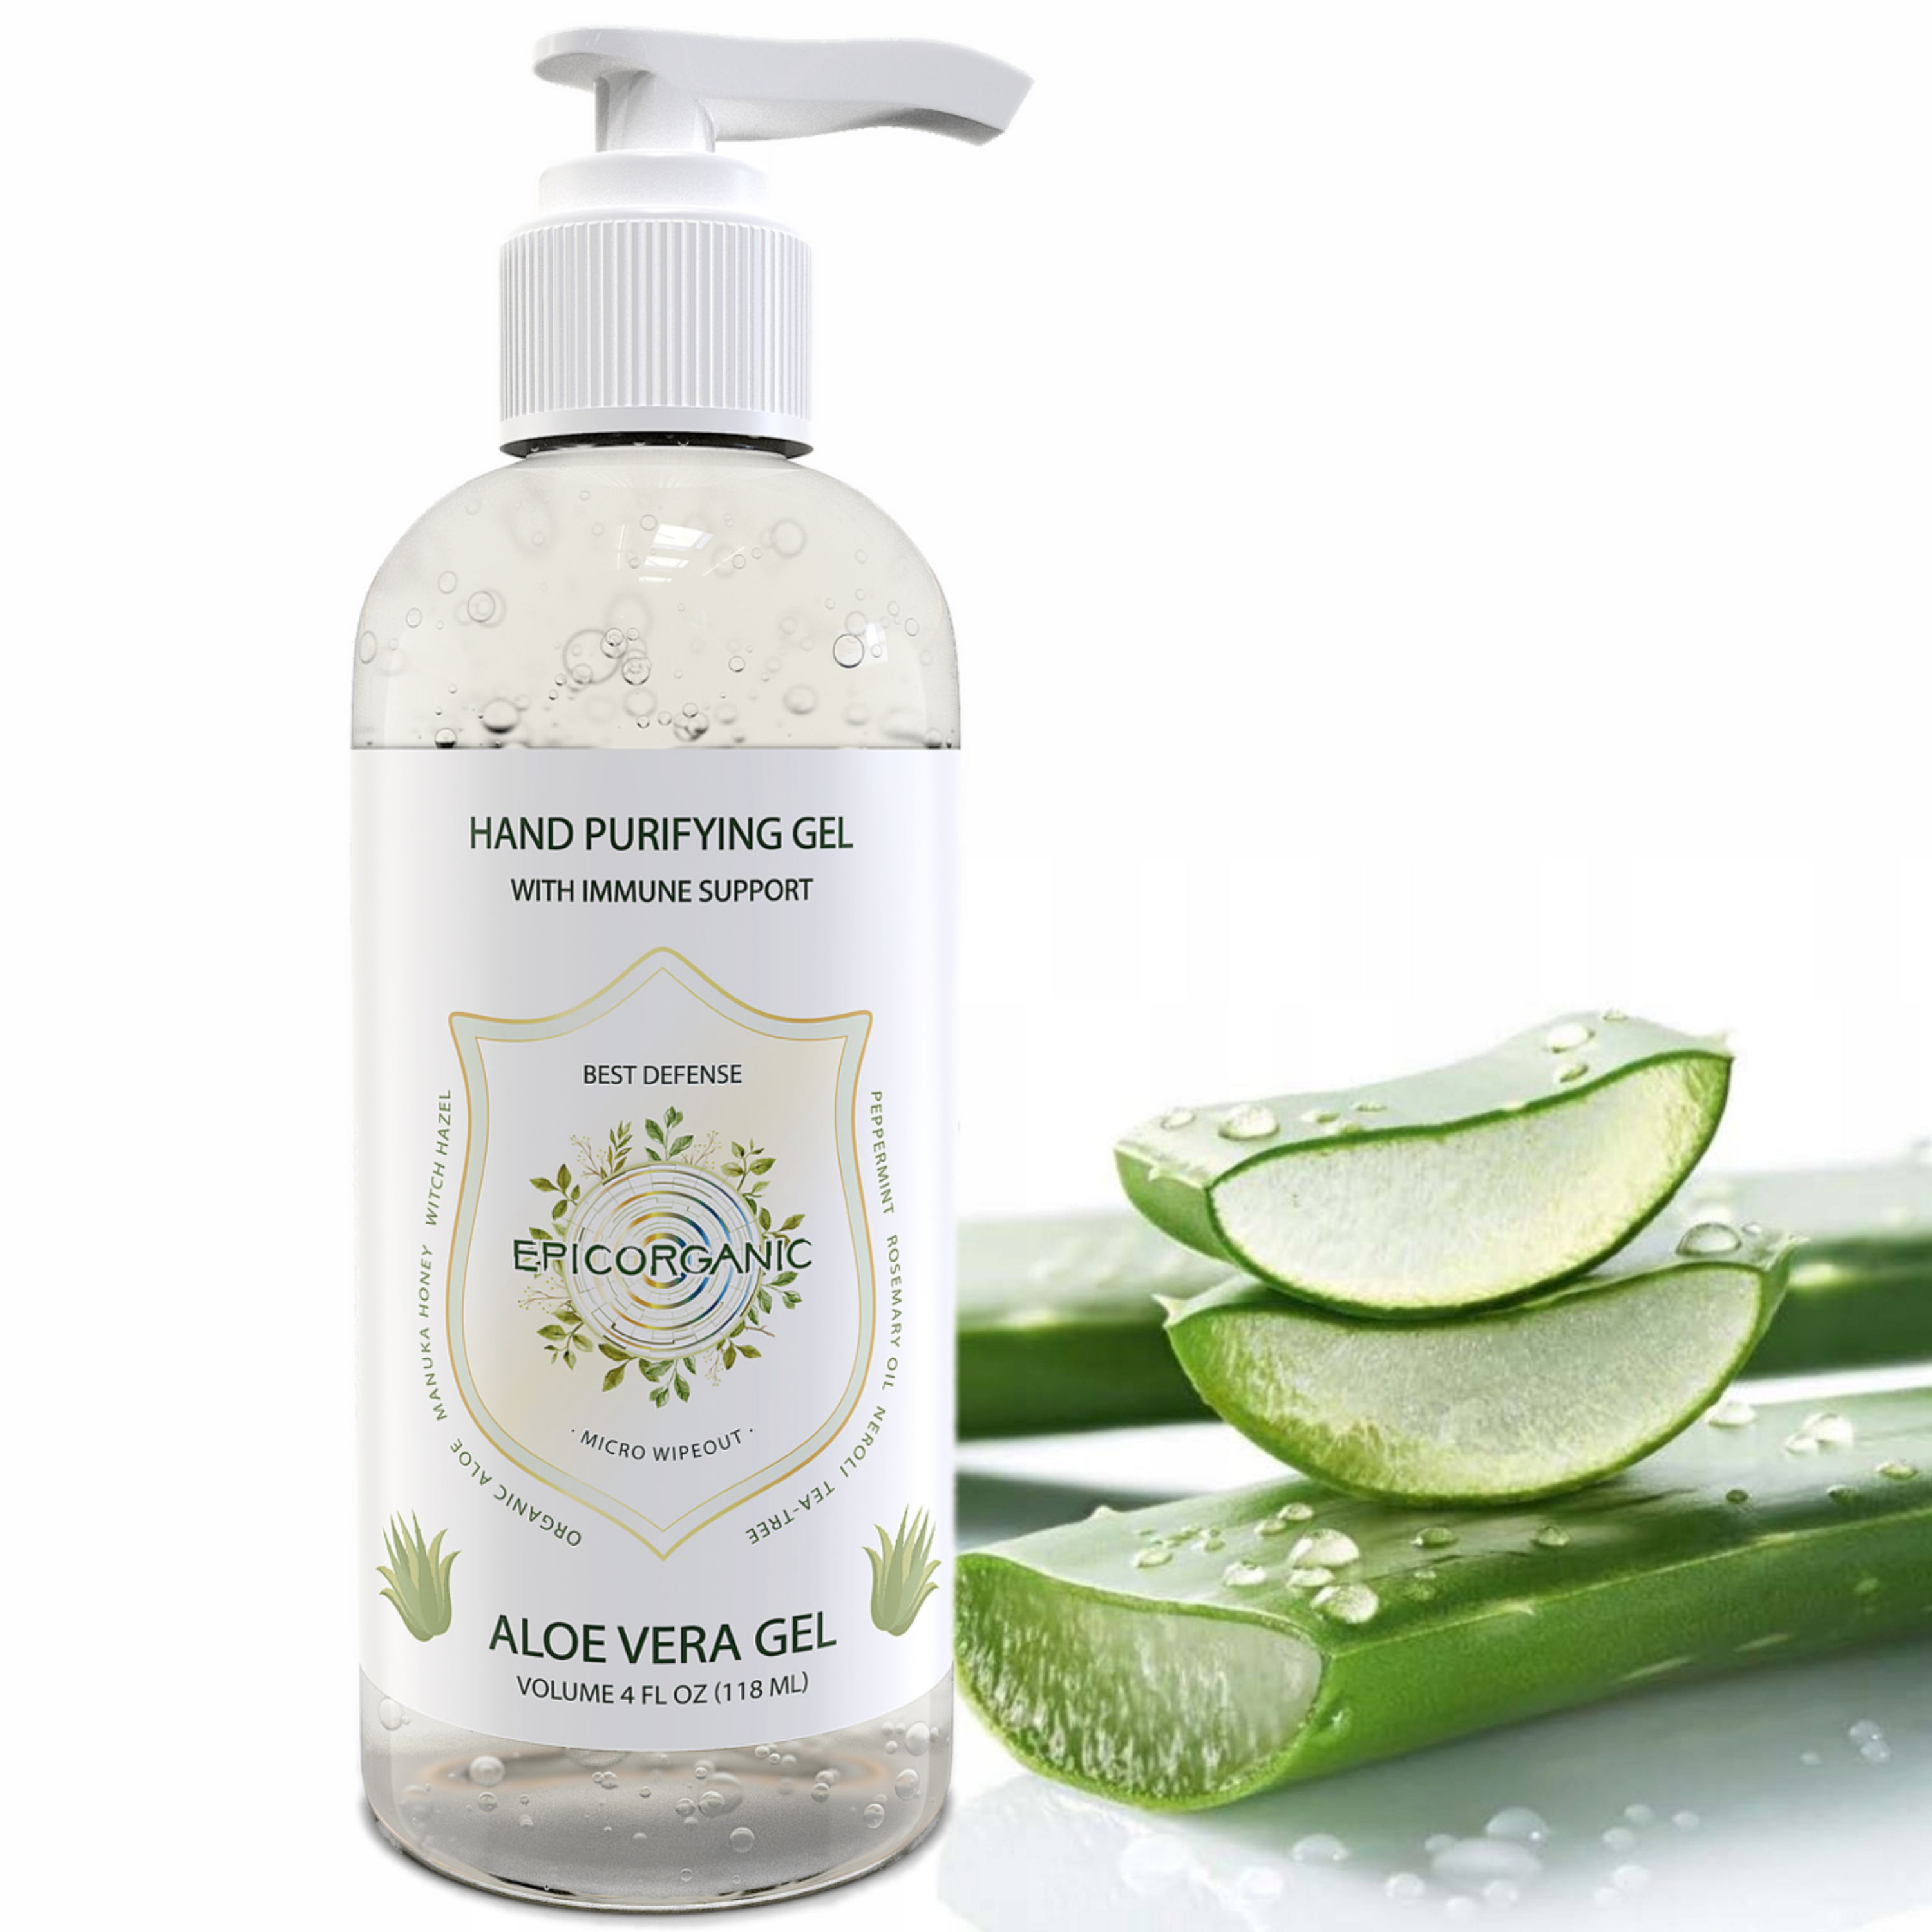 Aloe Vera Gel - Hand Purifying Gel with Immune Support (4 oz)